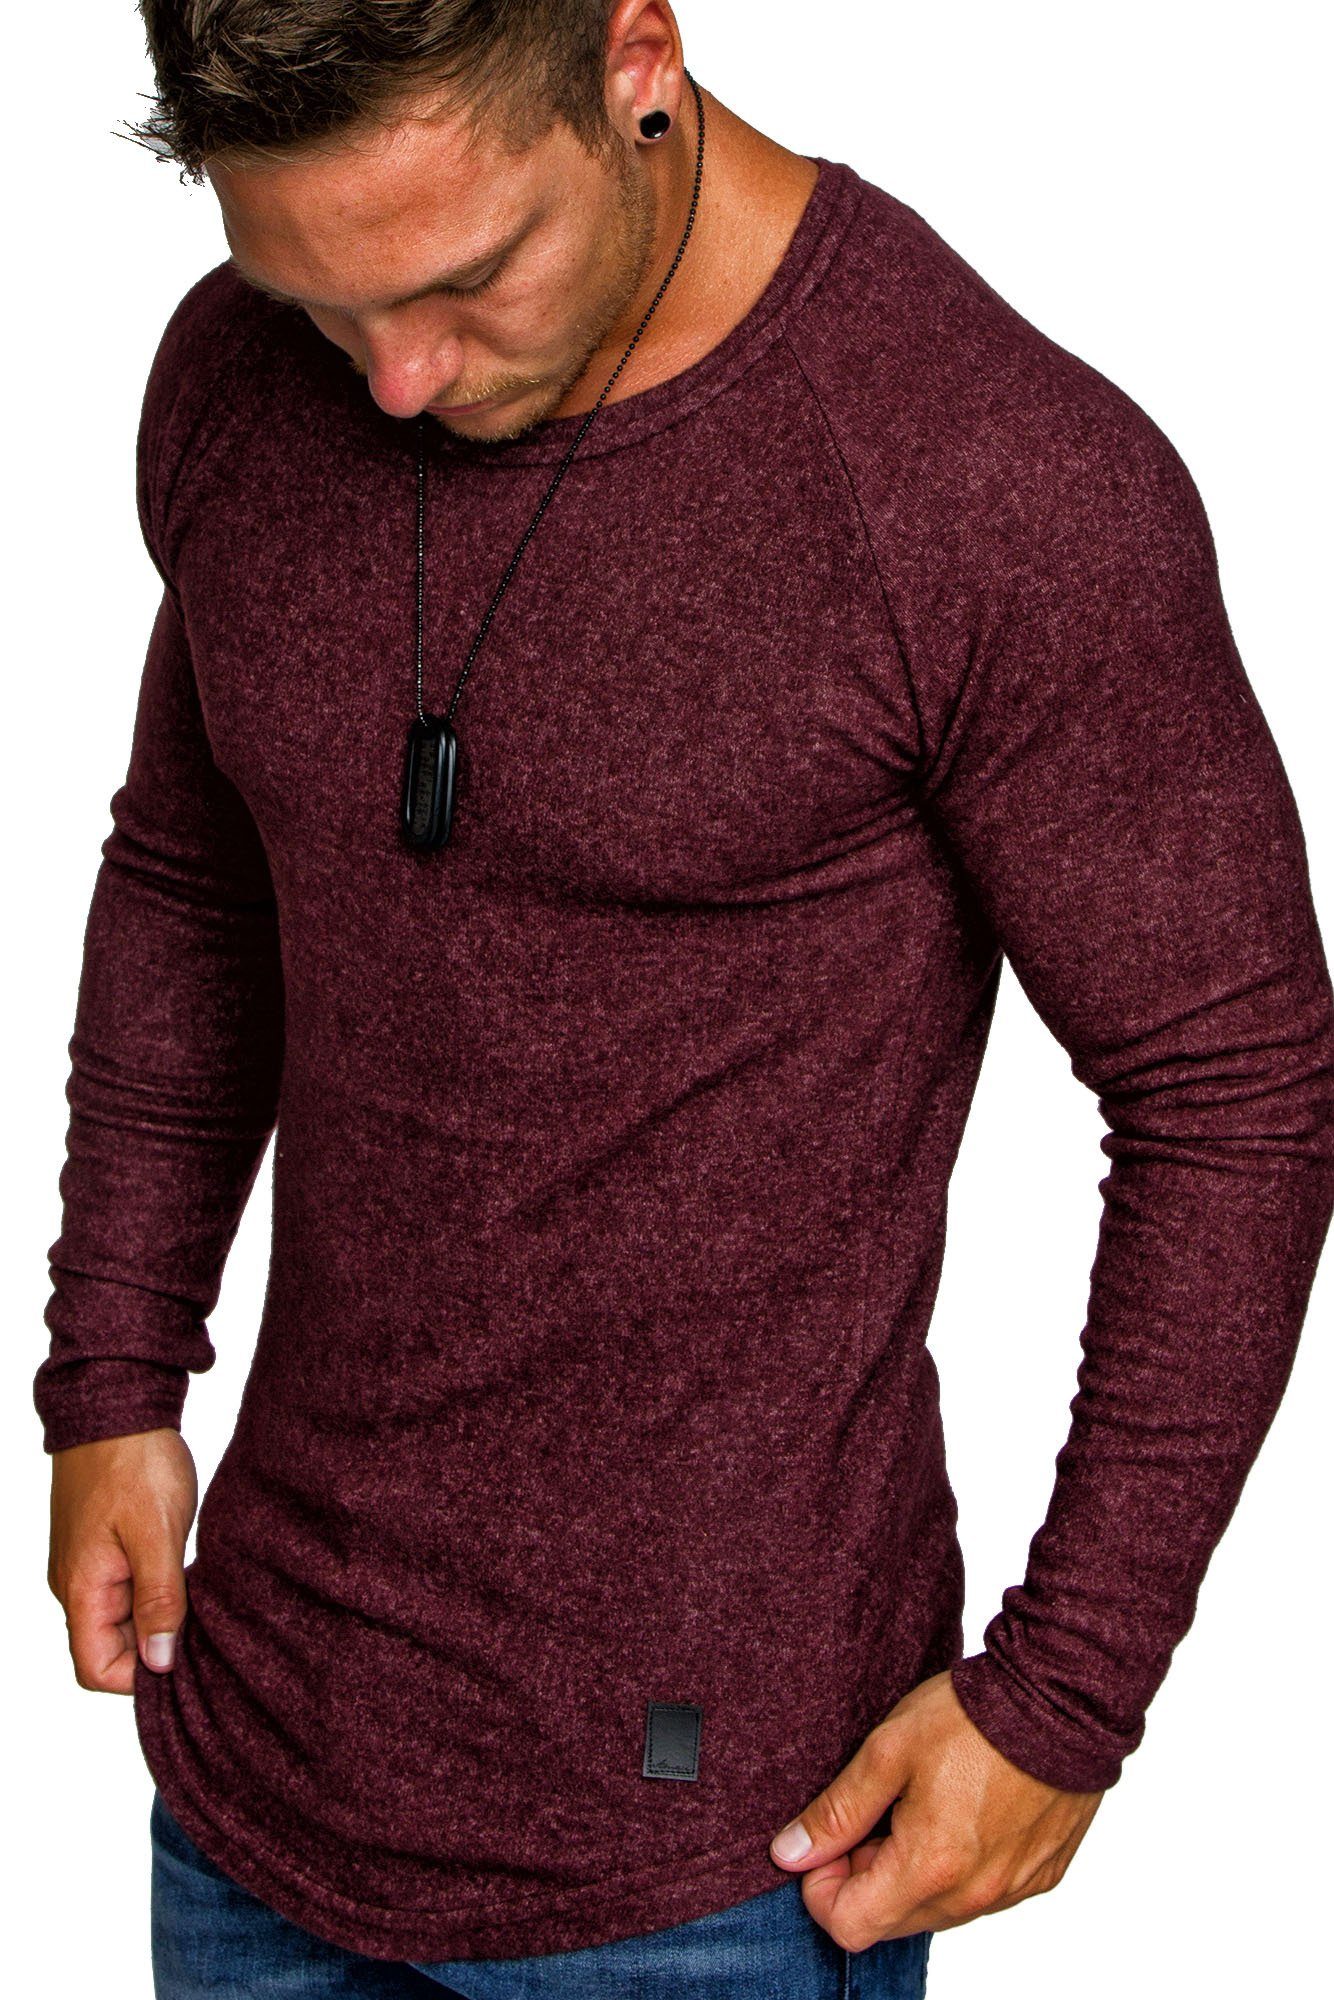 Amaci&Sons Sweatshirt TYLER Feinstrick Pullover Herren Oversize Basic Melange Pullover Hoodie mit Rundhals Bordeaux